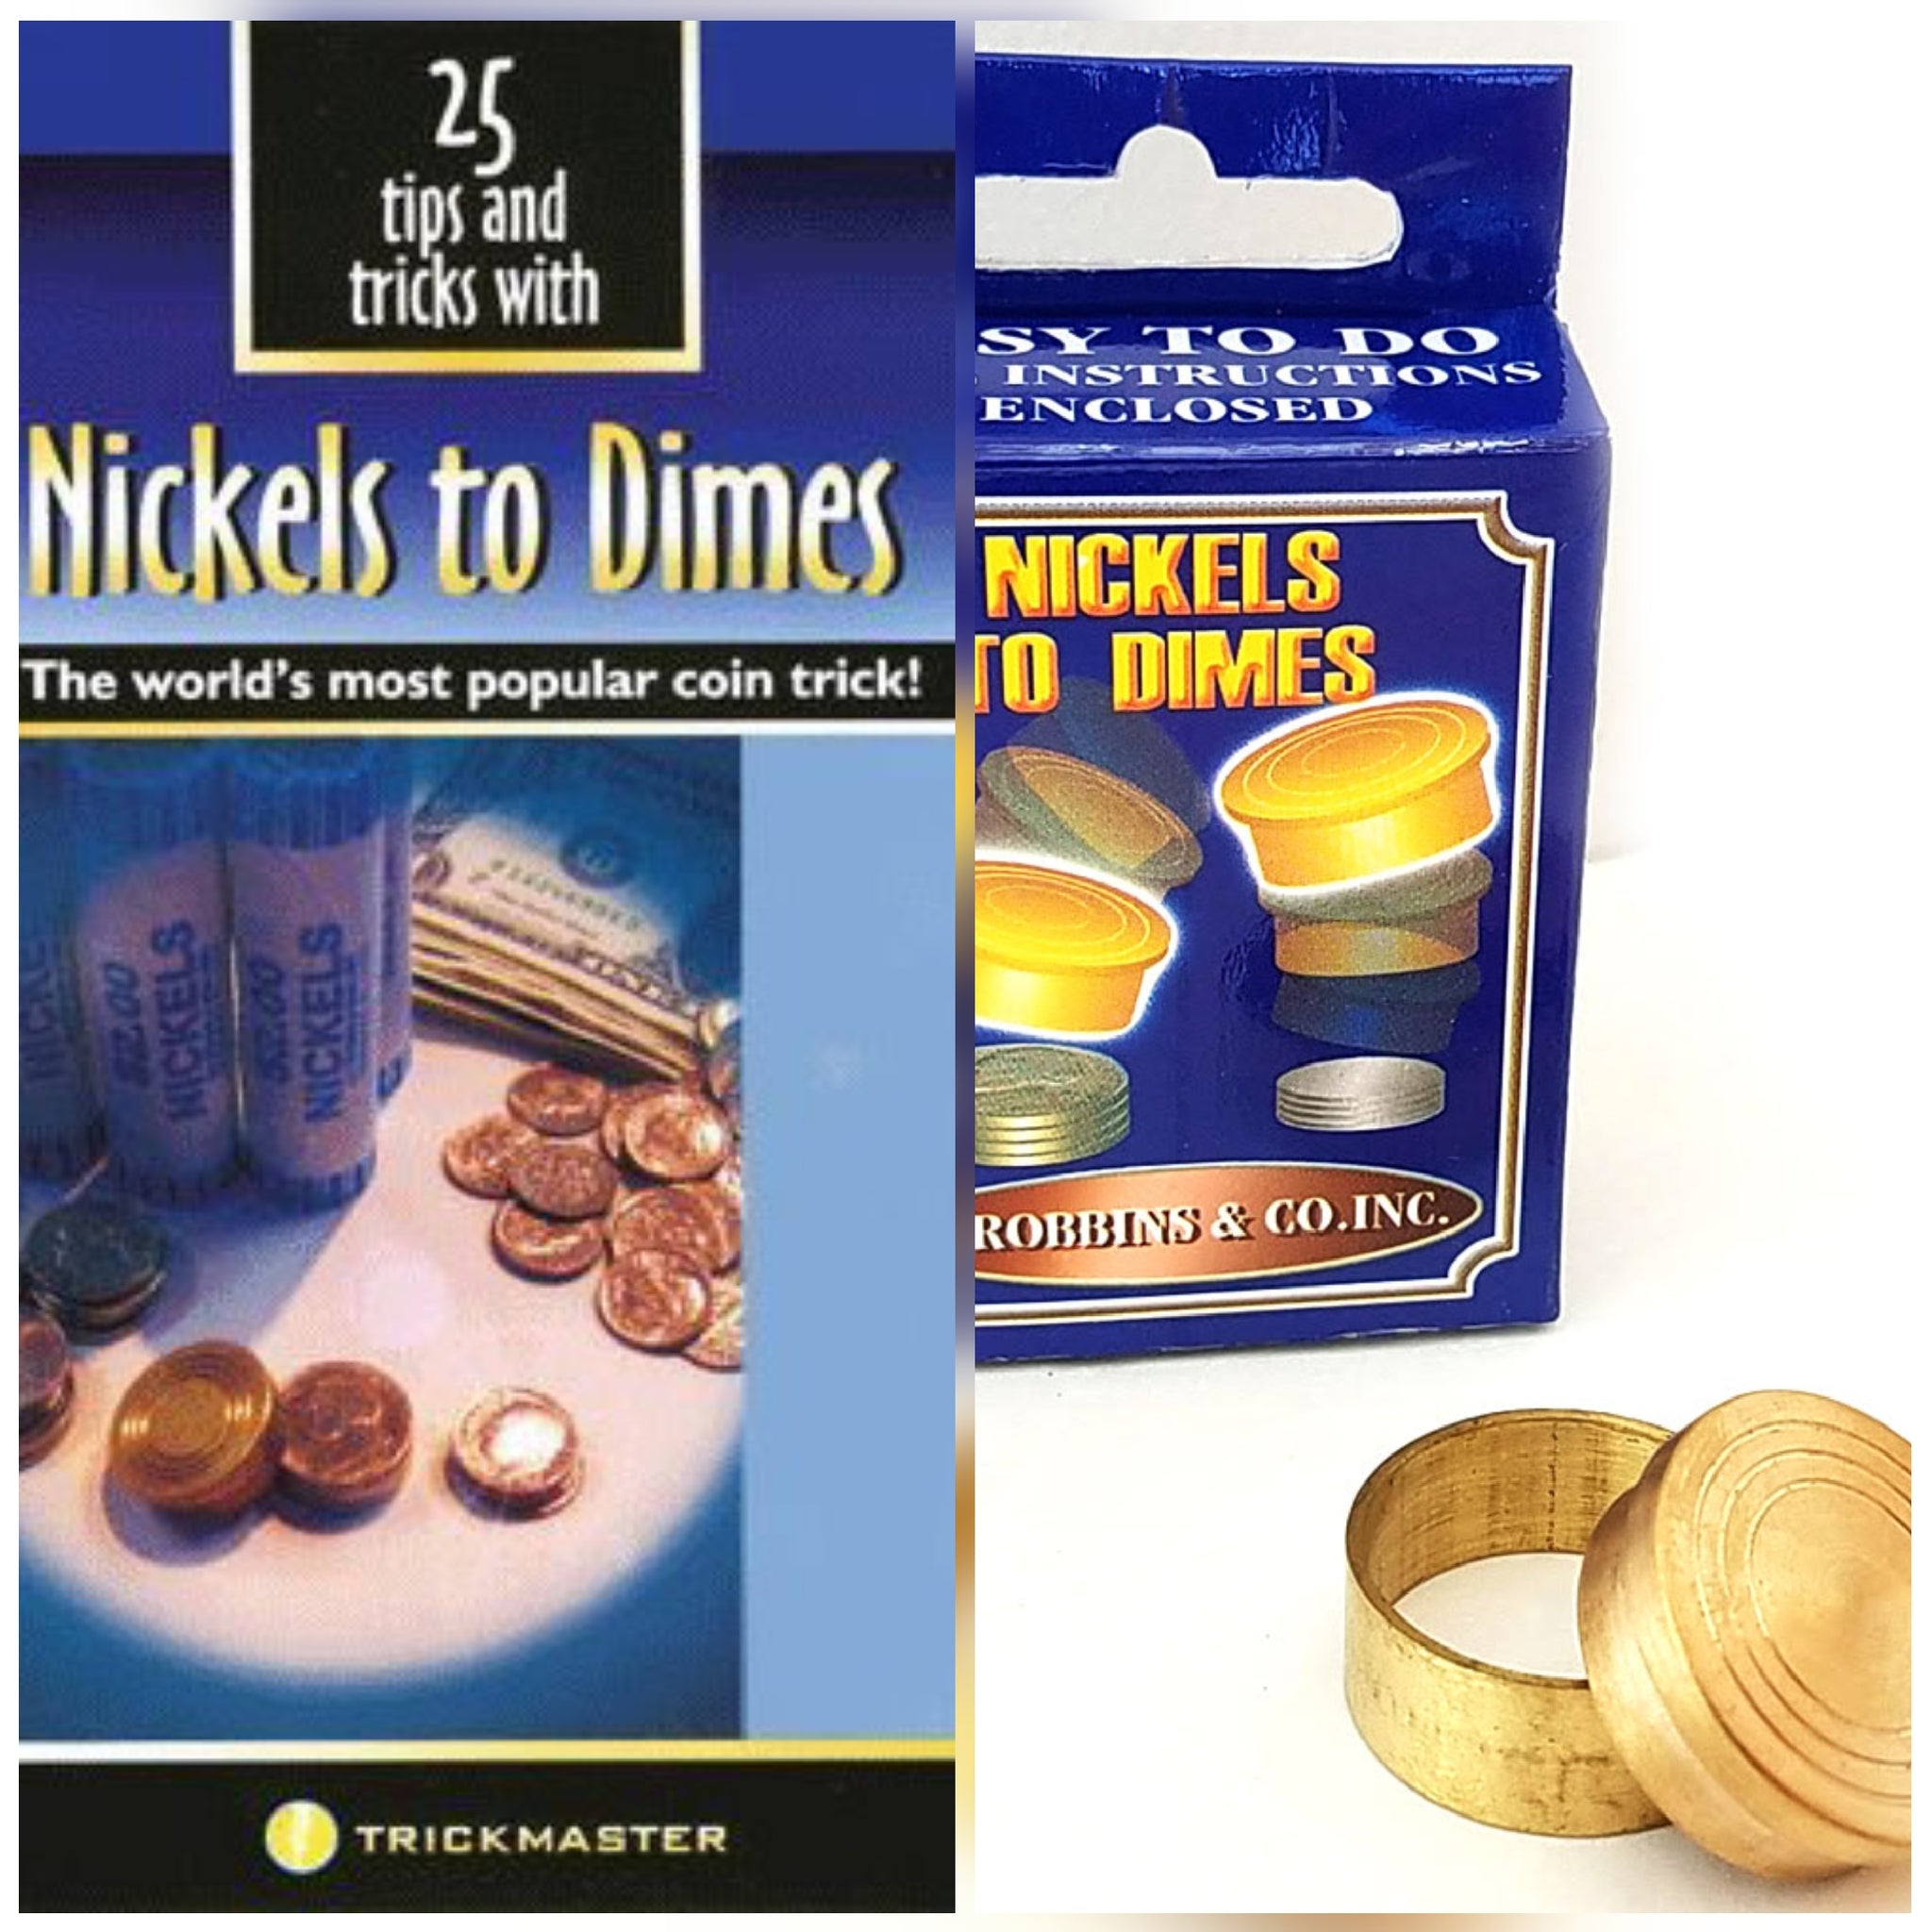 Nickels to Dimes plus Book of 25 tricks